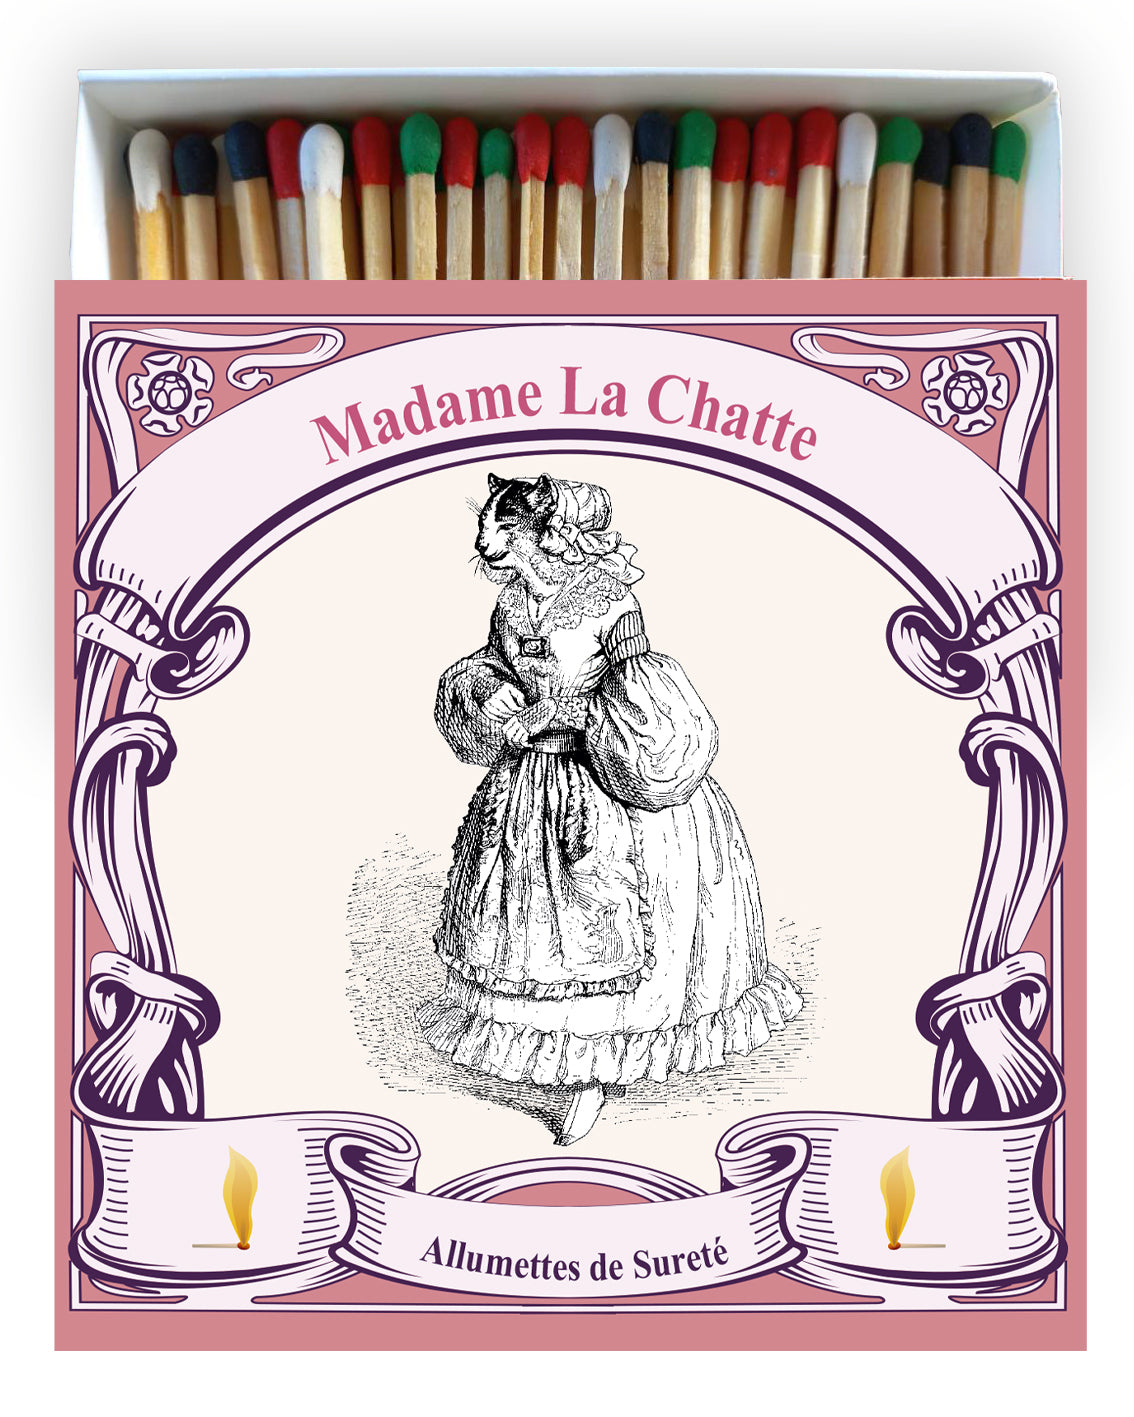 Madame La Chatte matches